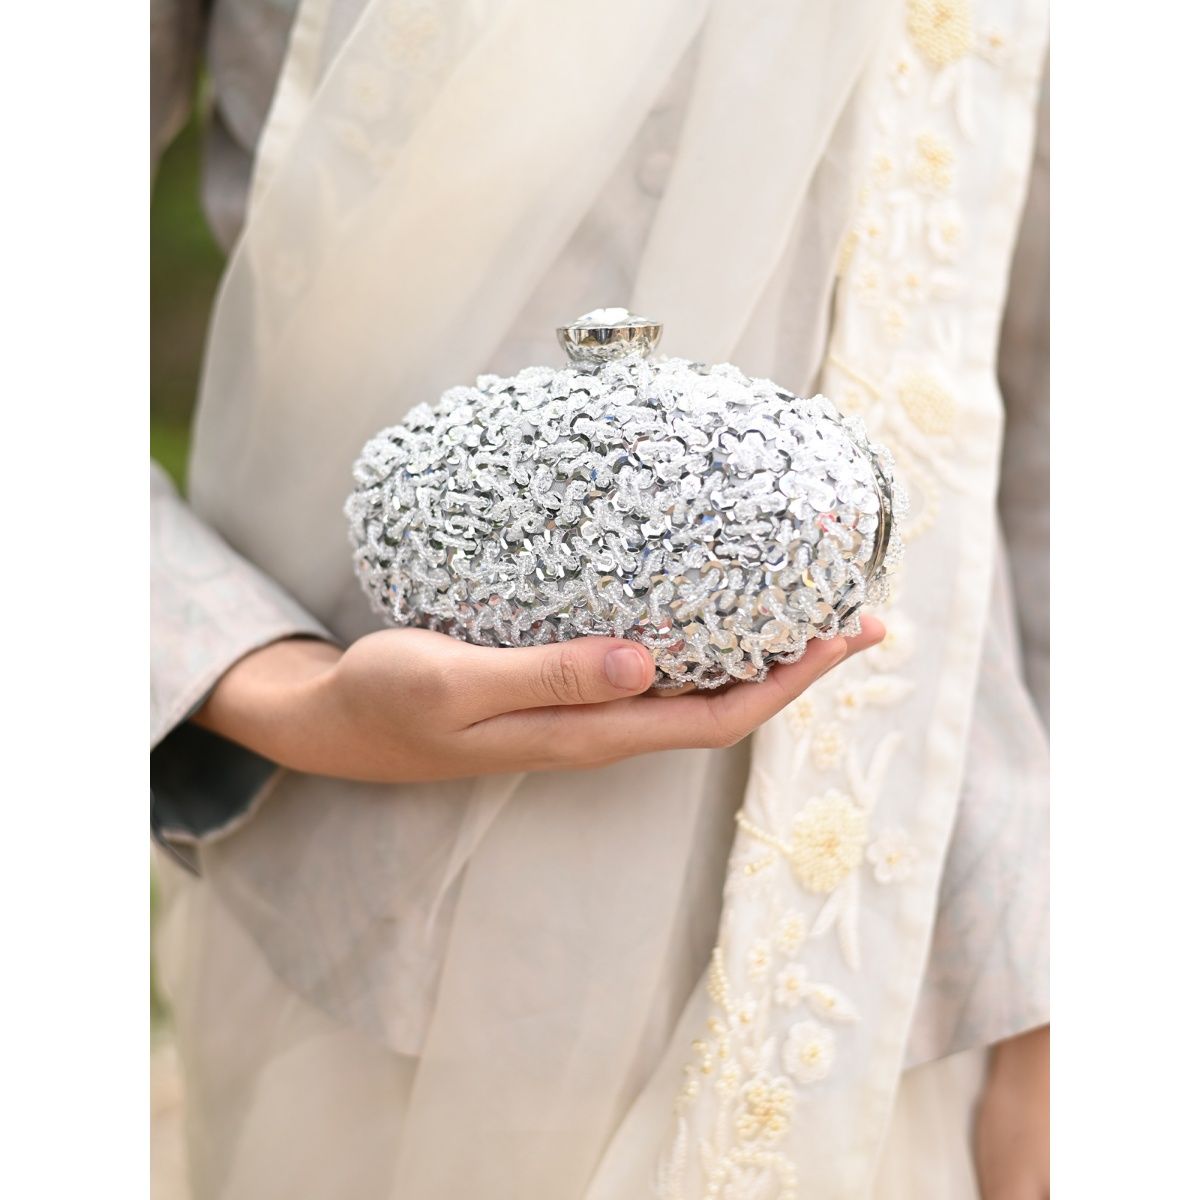 Gray luxury clutch bag for wedding day